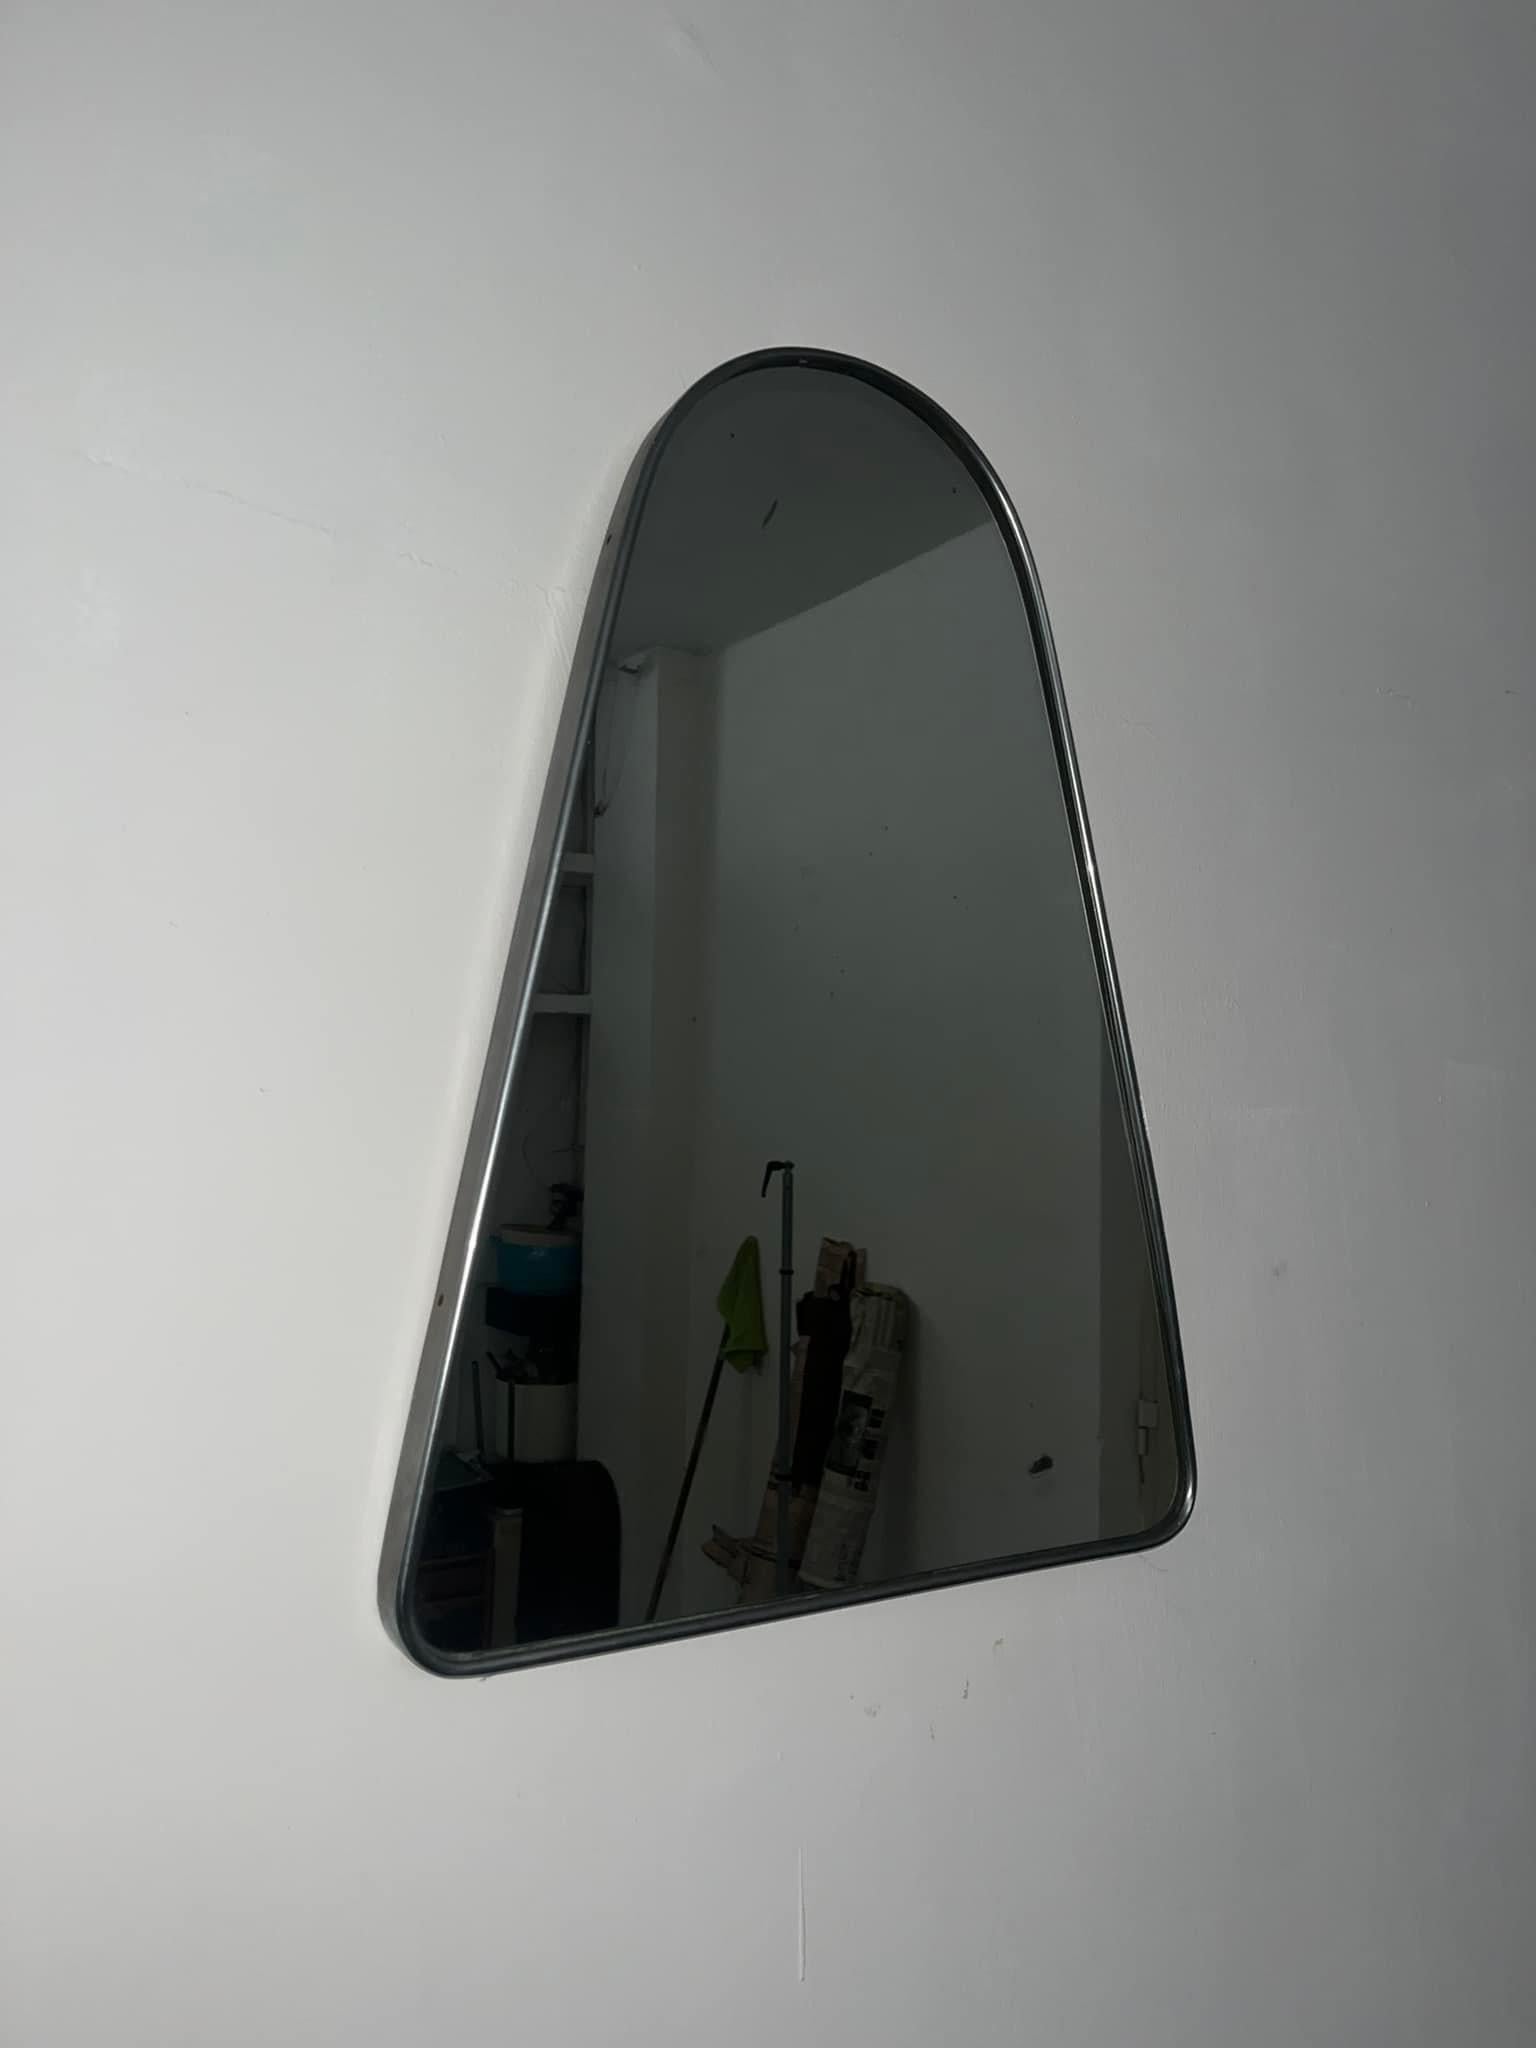 steel and glass mirror 60 cm high 44 cm wide 3 cm deep 